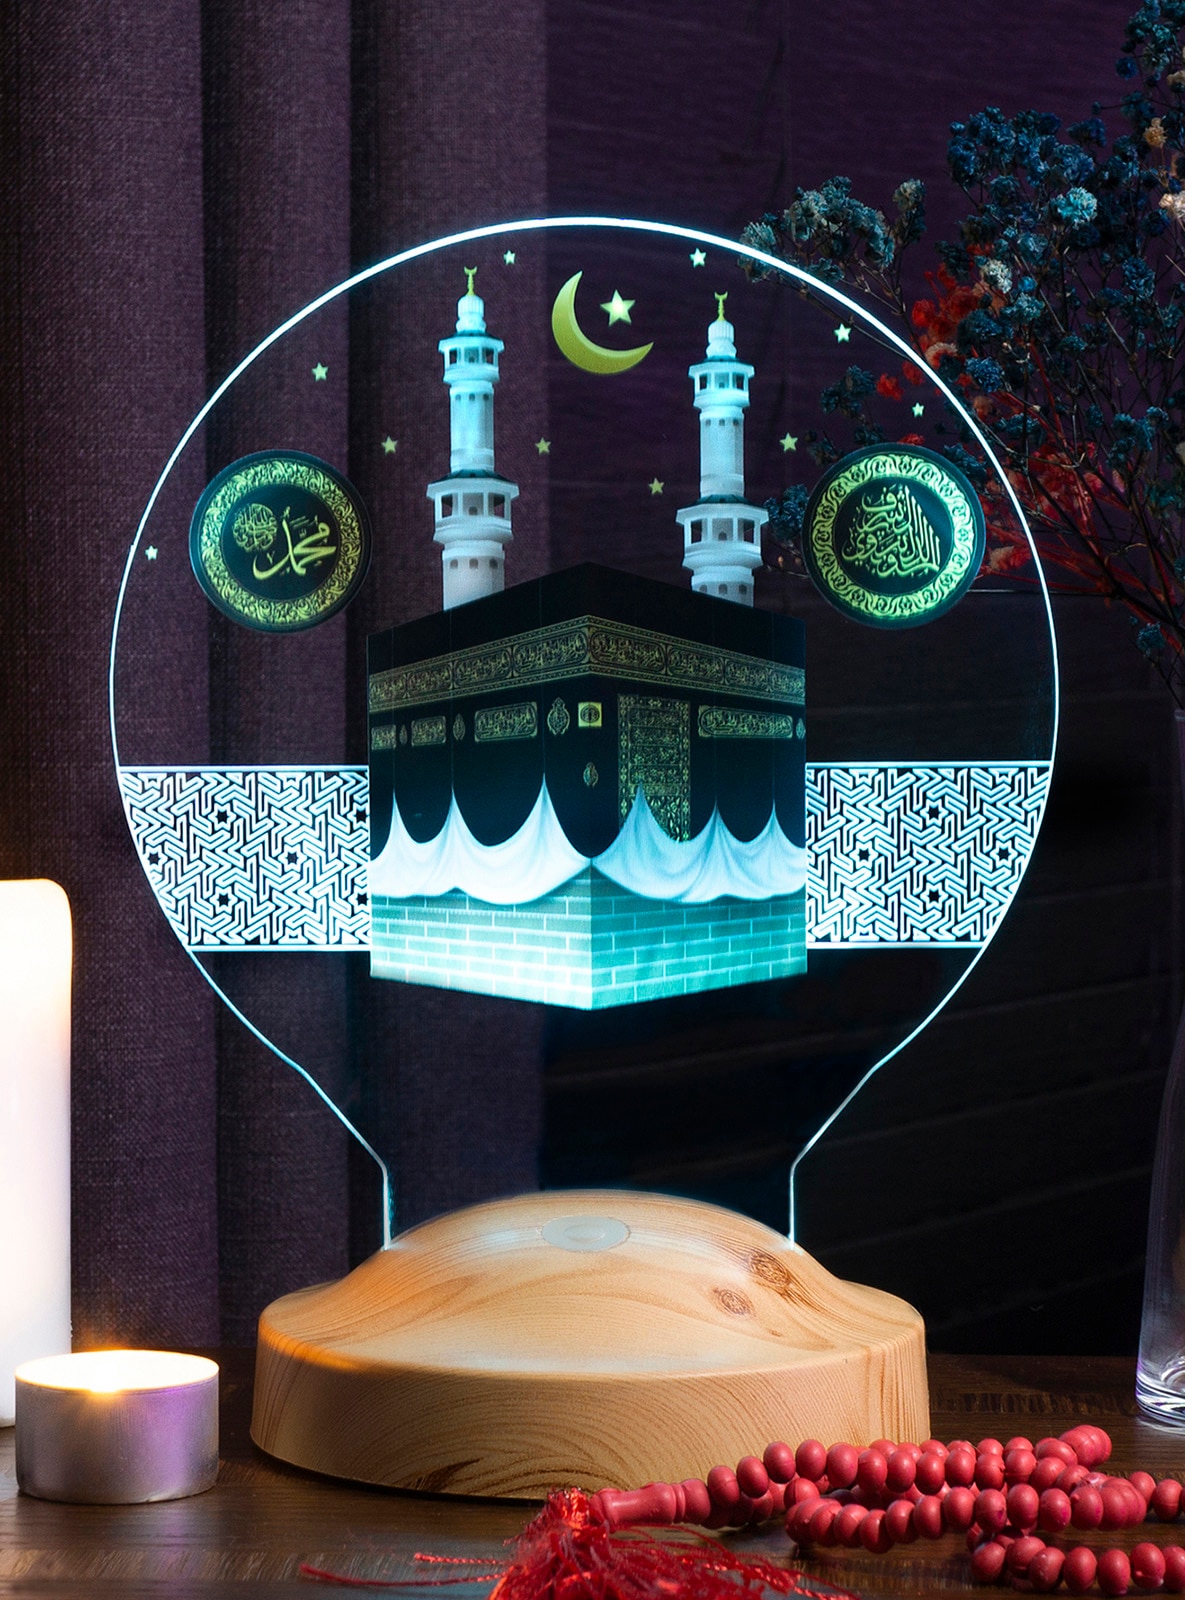 Kaaba Night Lamp, İslamic Room Decor, Gift for Muslim Friend, Mecca Lamp, Colour Changing Night Light, Eid Mubarak